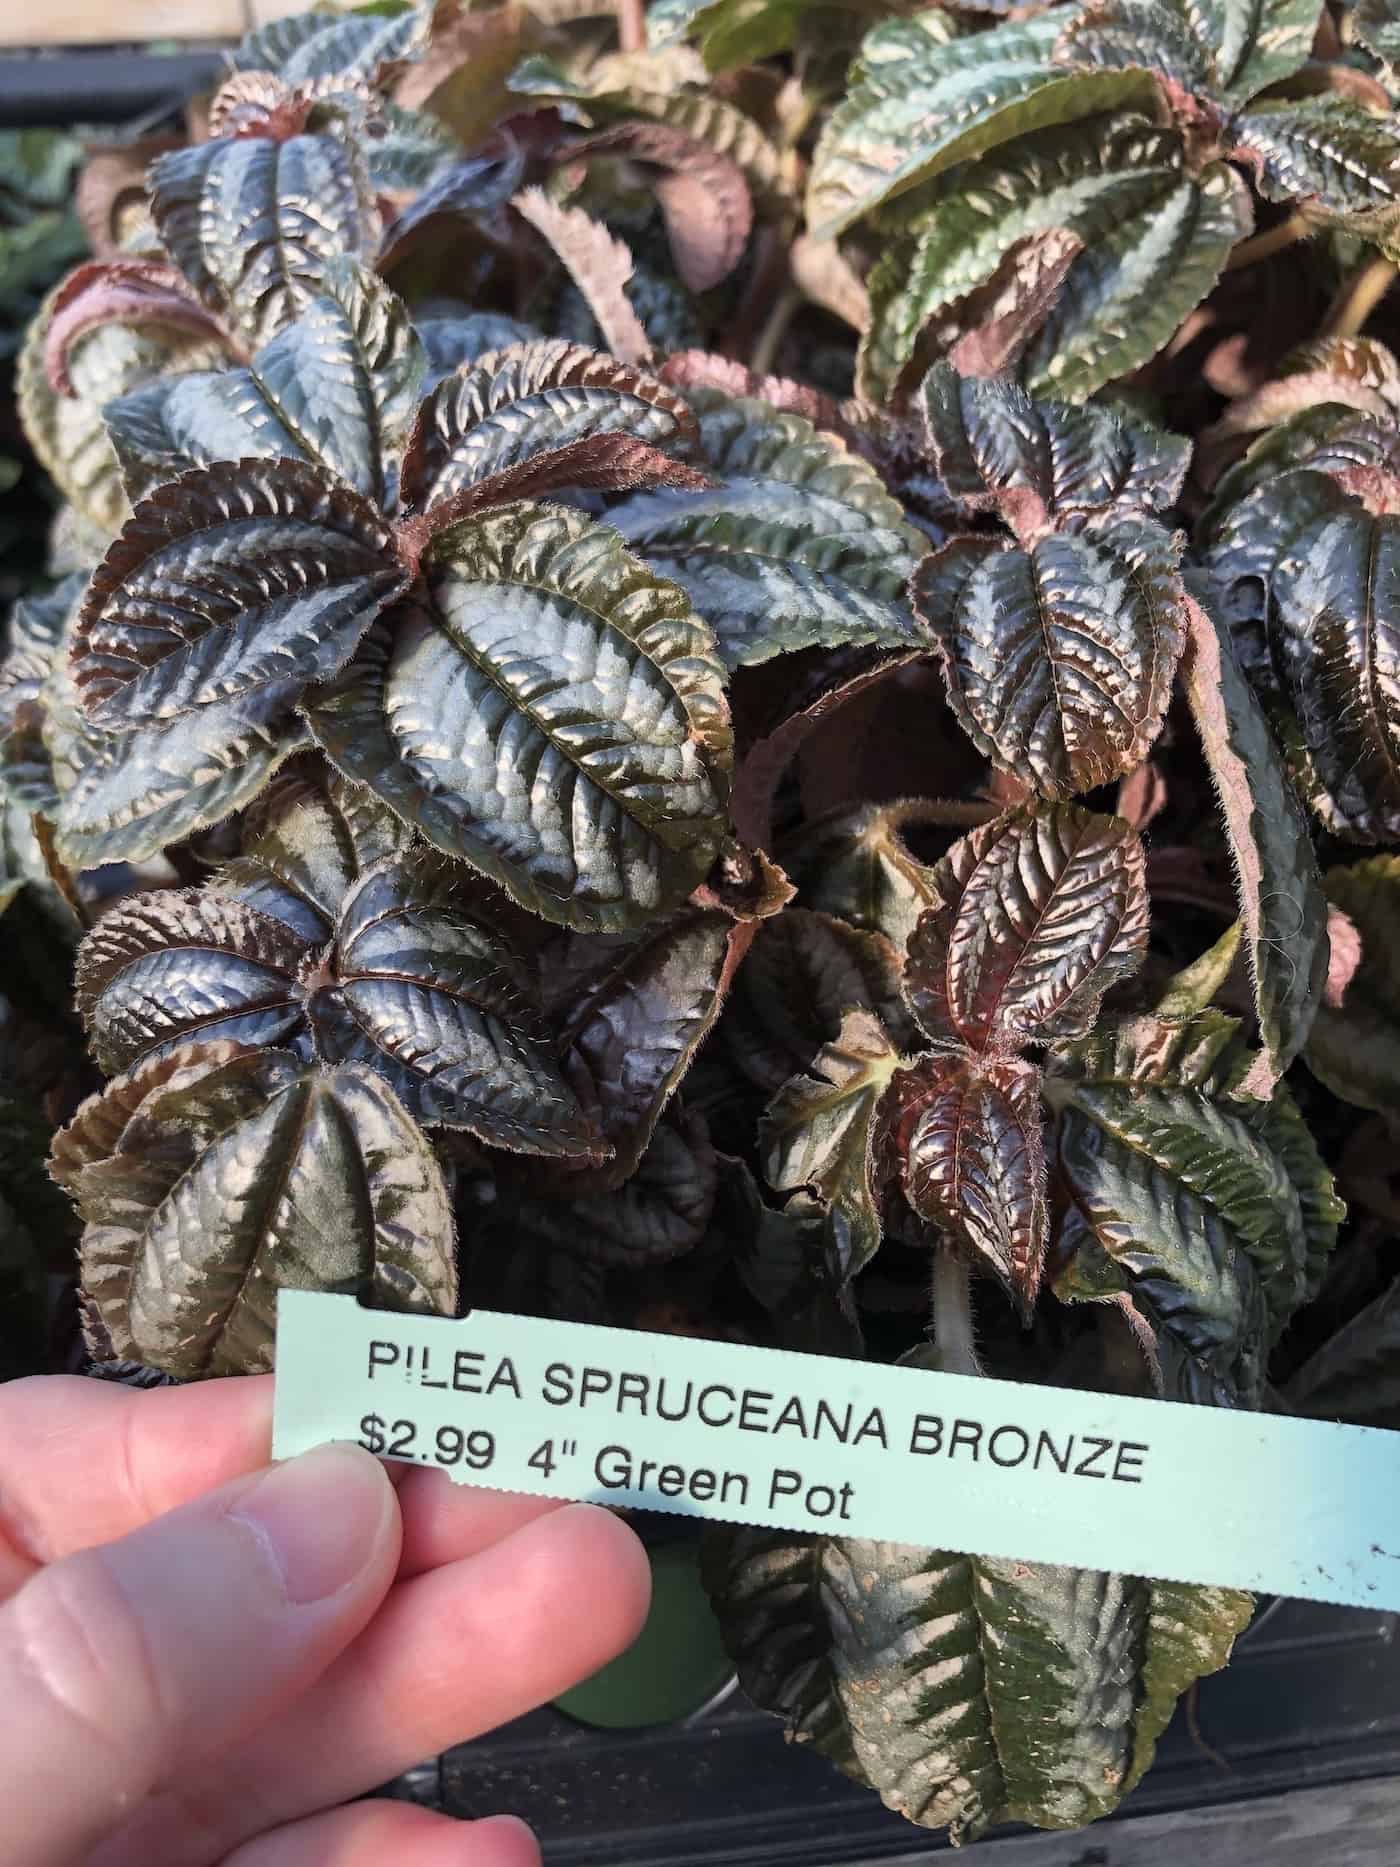 Pilea spruceana bronze plants